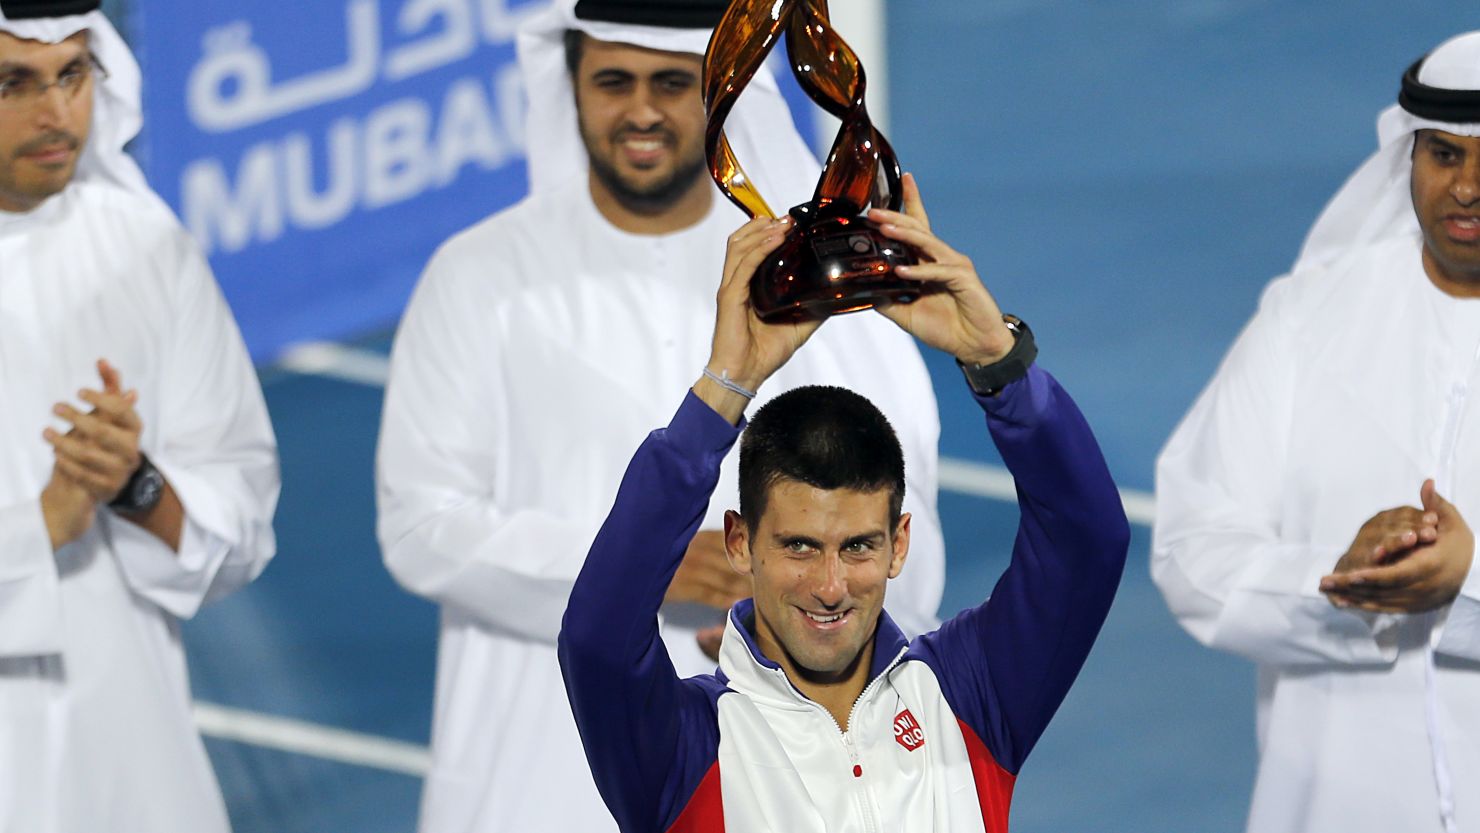 Serbia's Novak Djokovic celebrates winning the Mubadala World Tennis Championship for the second year in a row.